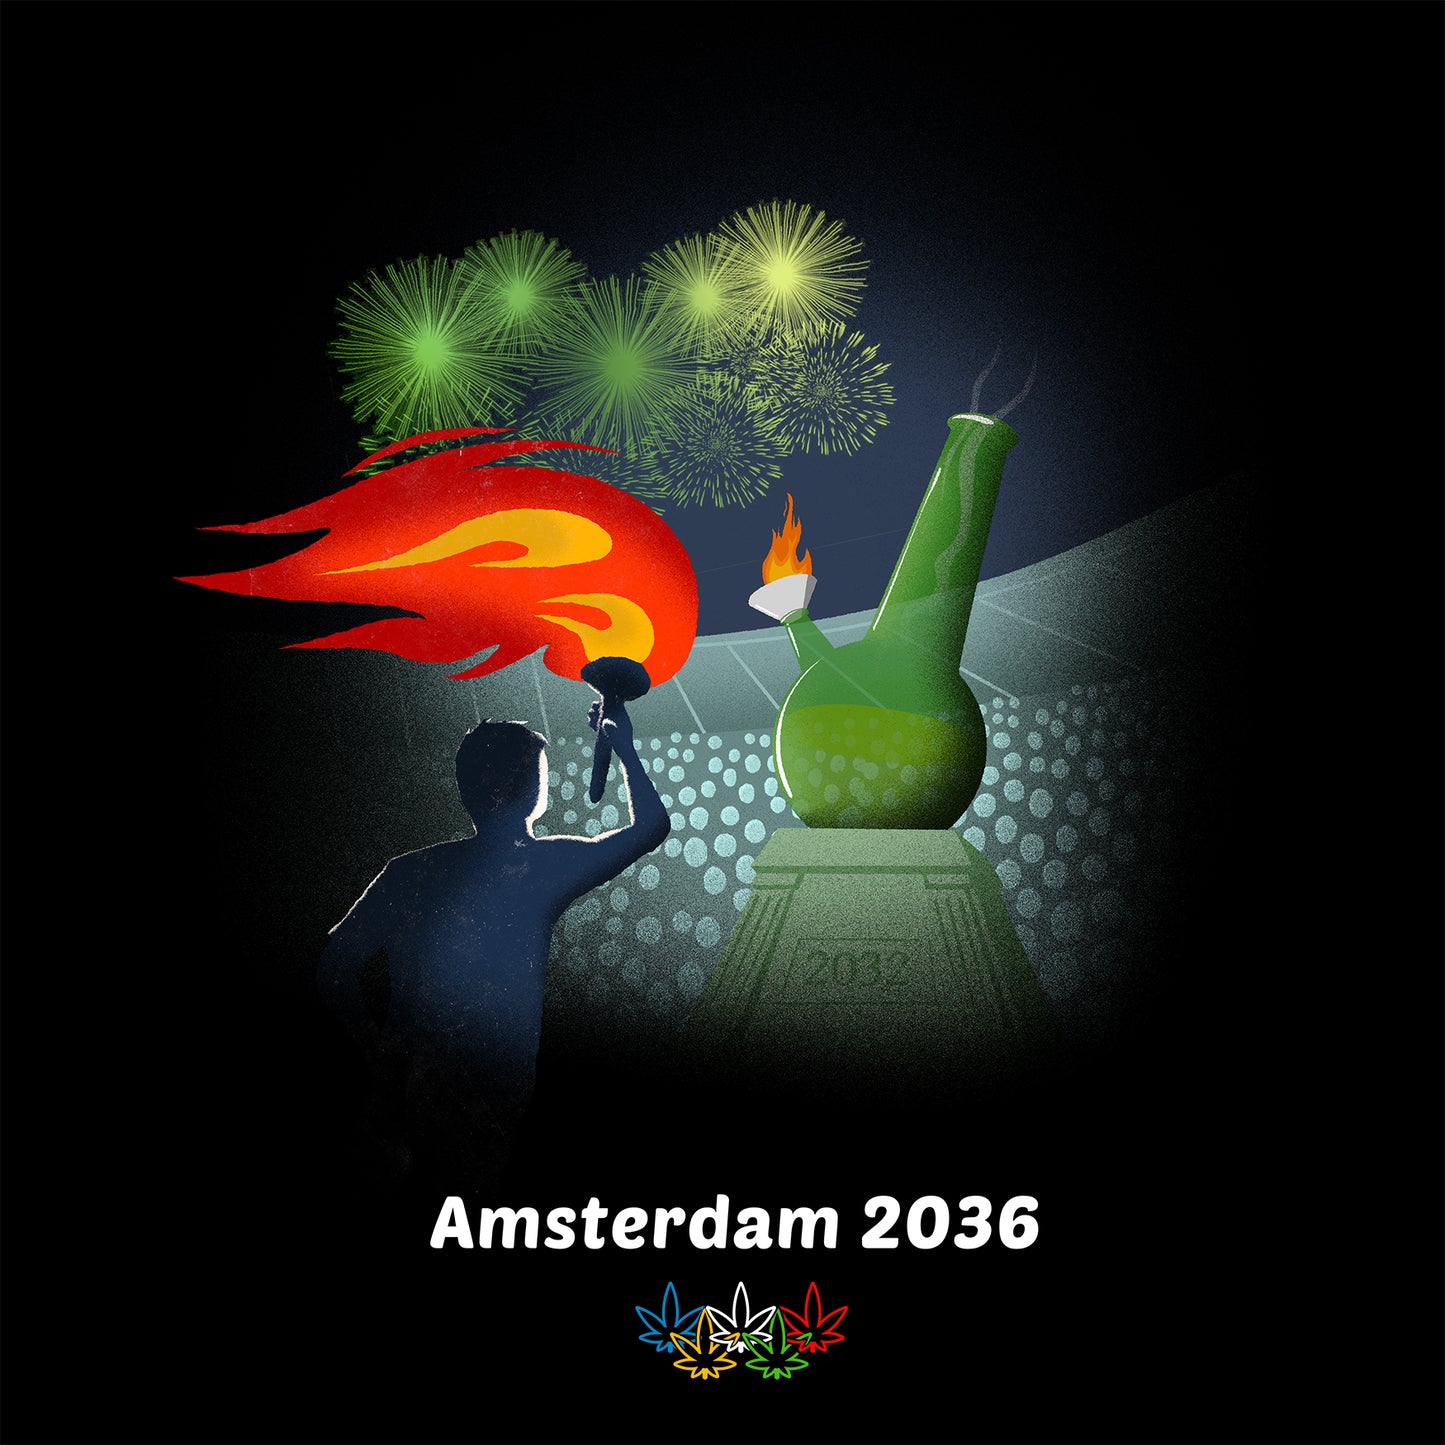 Amsterdam 2036 - Unisex Crewneck T-shirt